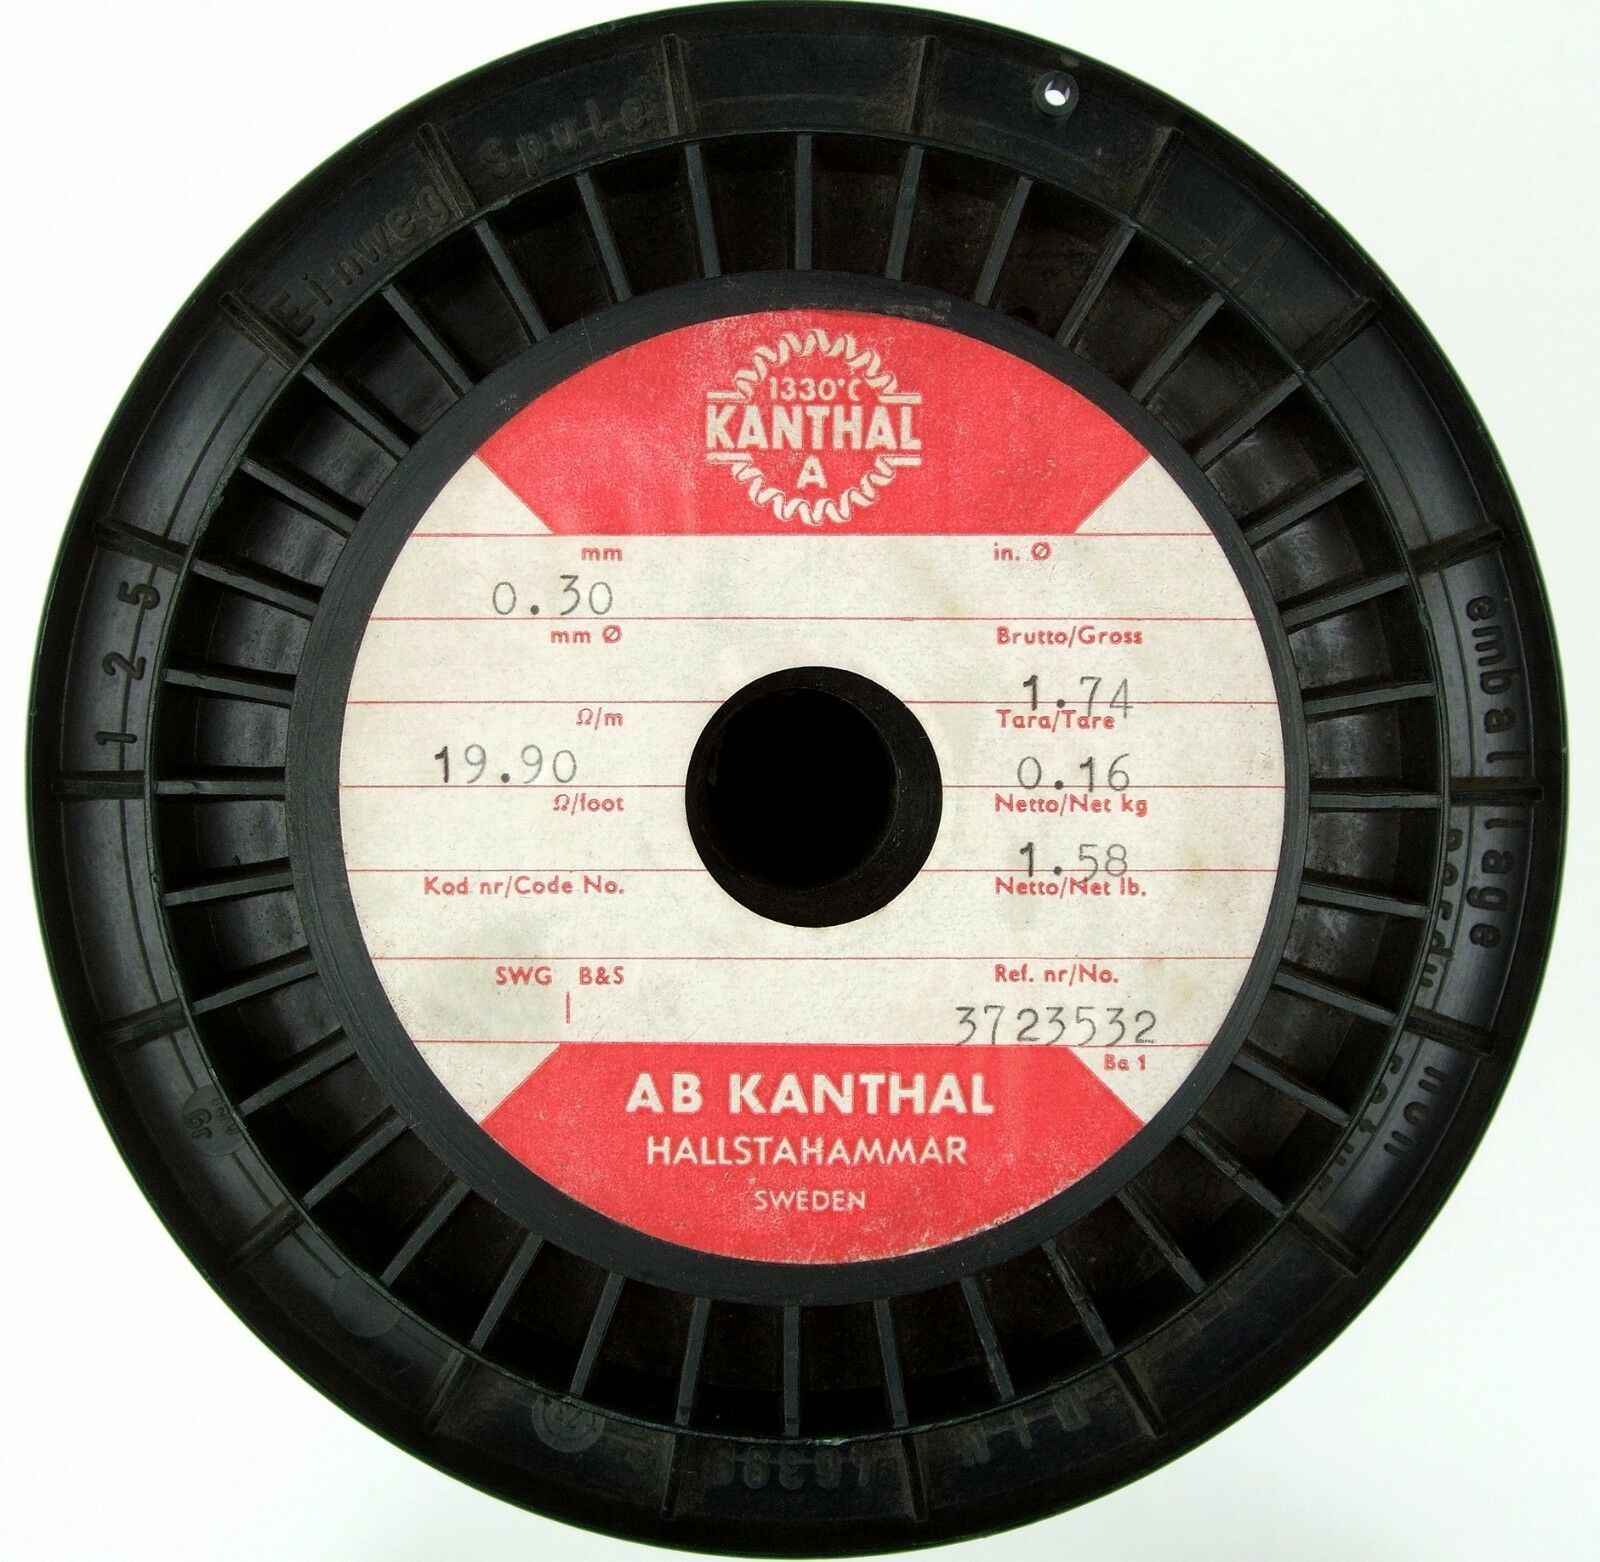 Kanthal A 0,30mm 19,9 Ω/m, Original Widerstandsdraht Heizdraht, 3-20 Meter - $1.21 - $4.12